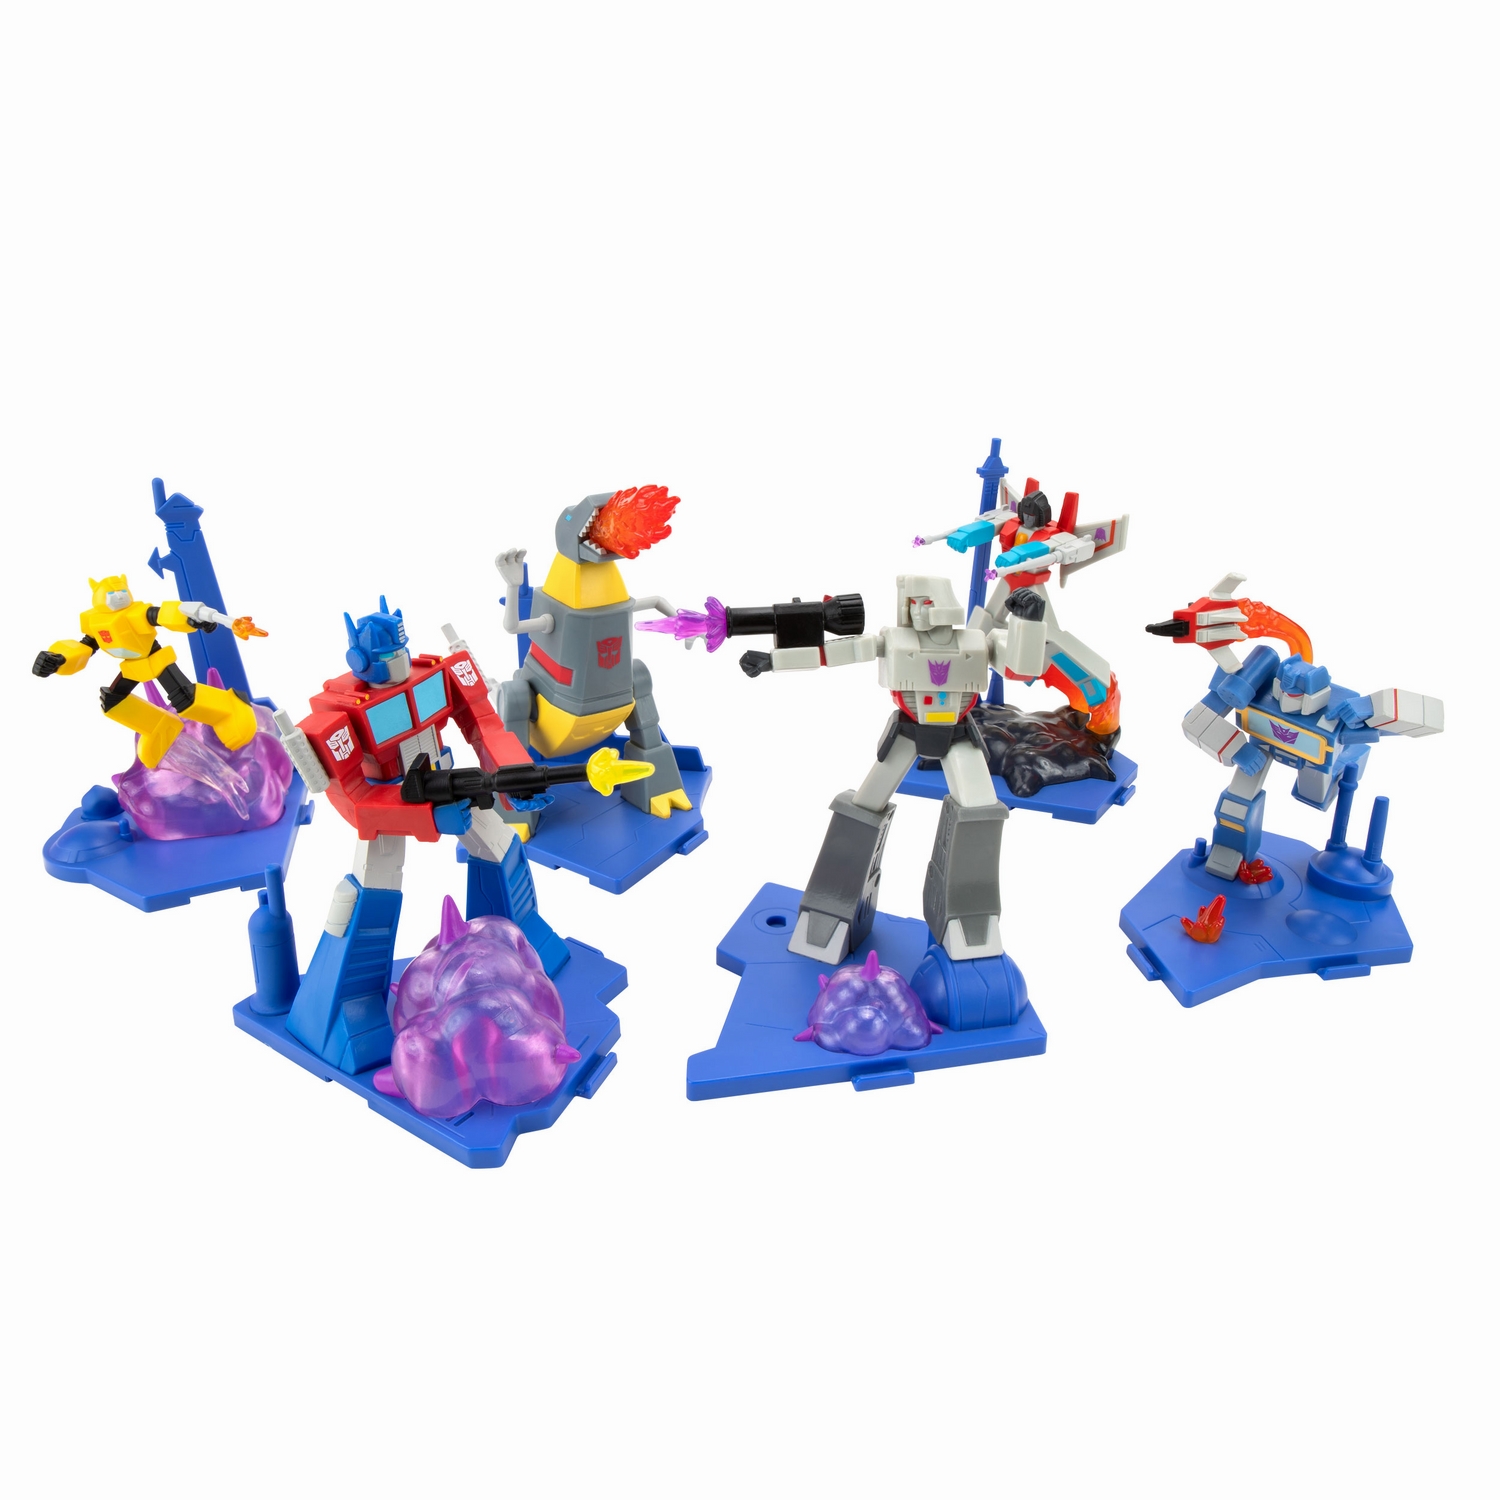 Zoteki-Transformers-Group-Fig-04-OP_Web.jpg